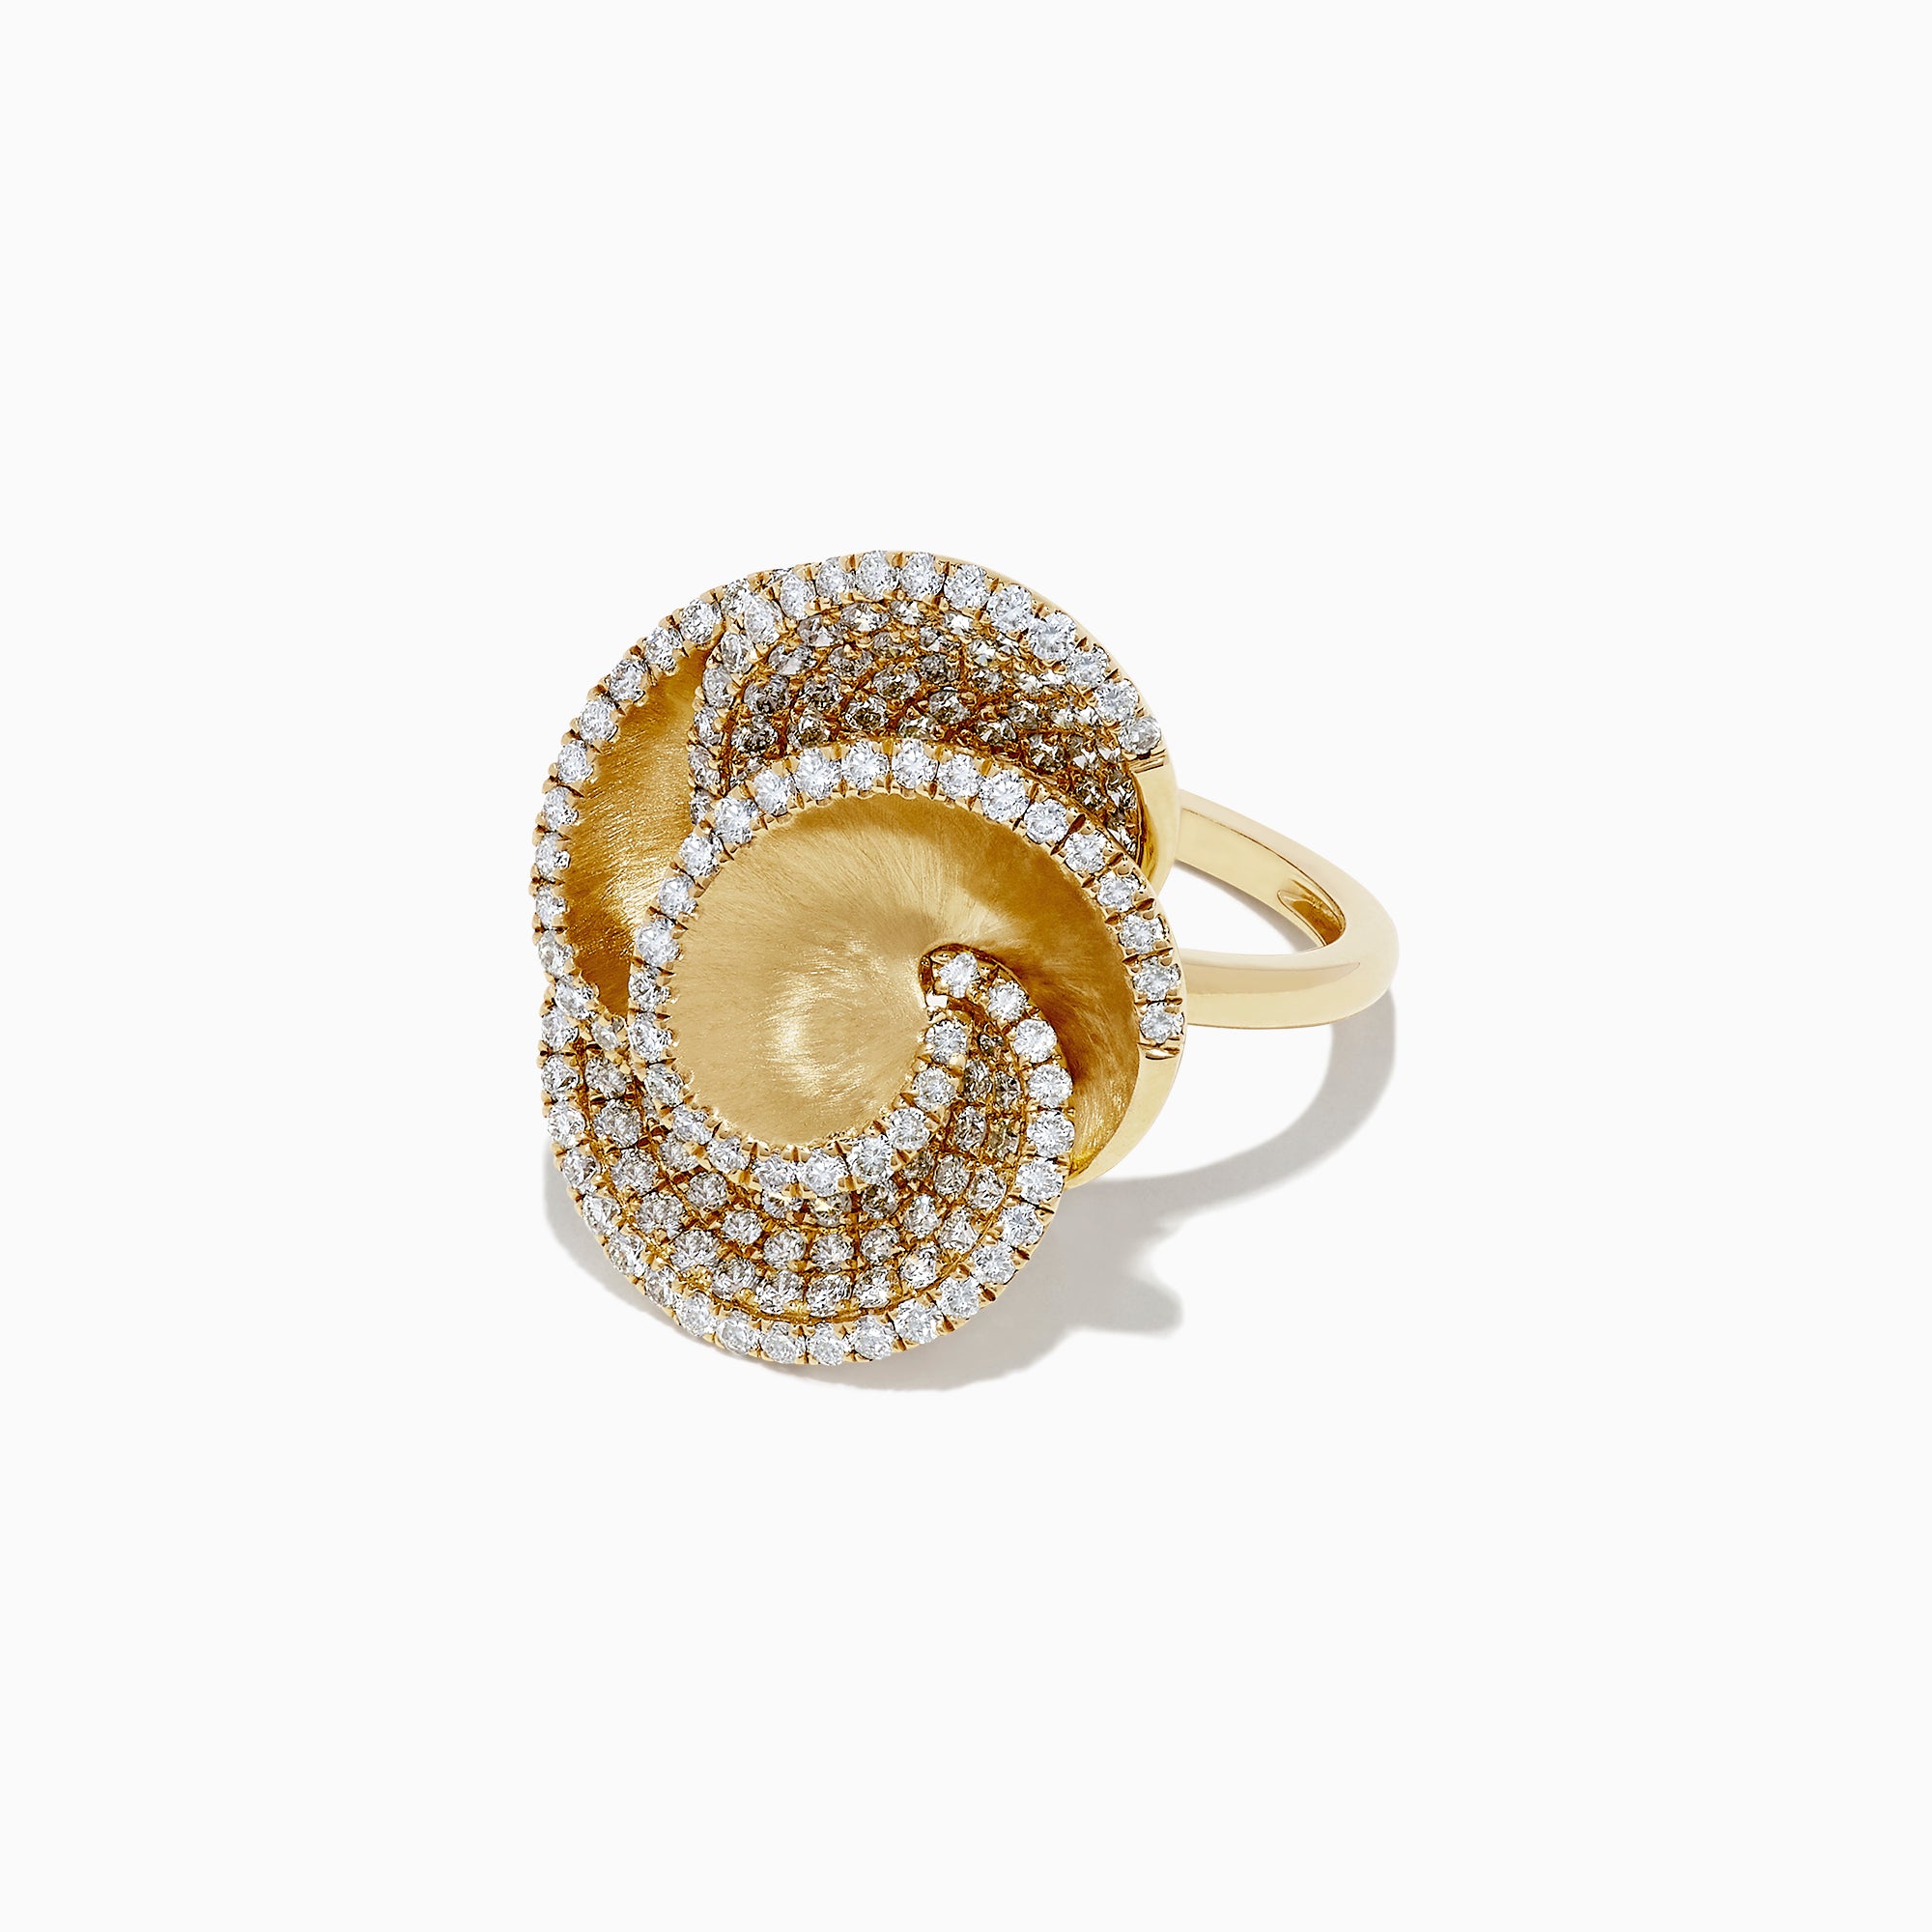 Effy D'Oro 14K Yellow Gold Diamond Flower Ring, 1.61 TCW